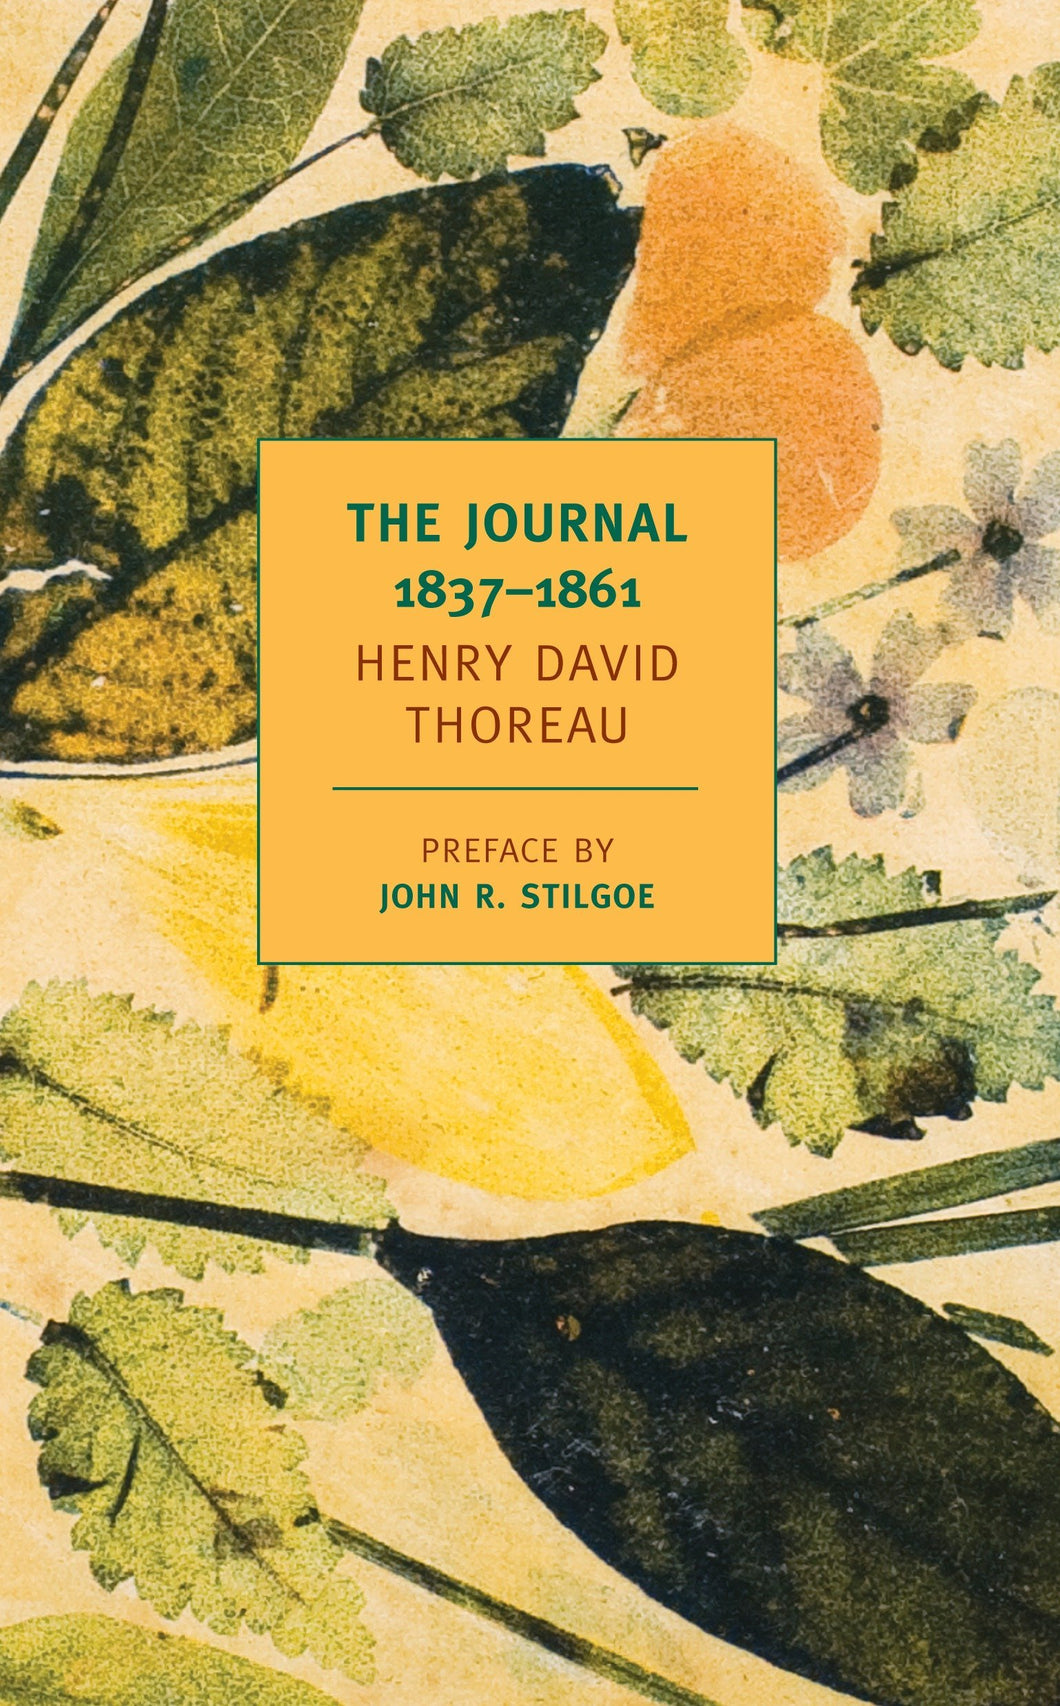 The Journal of Henry David Thoreau, 1837-1861